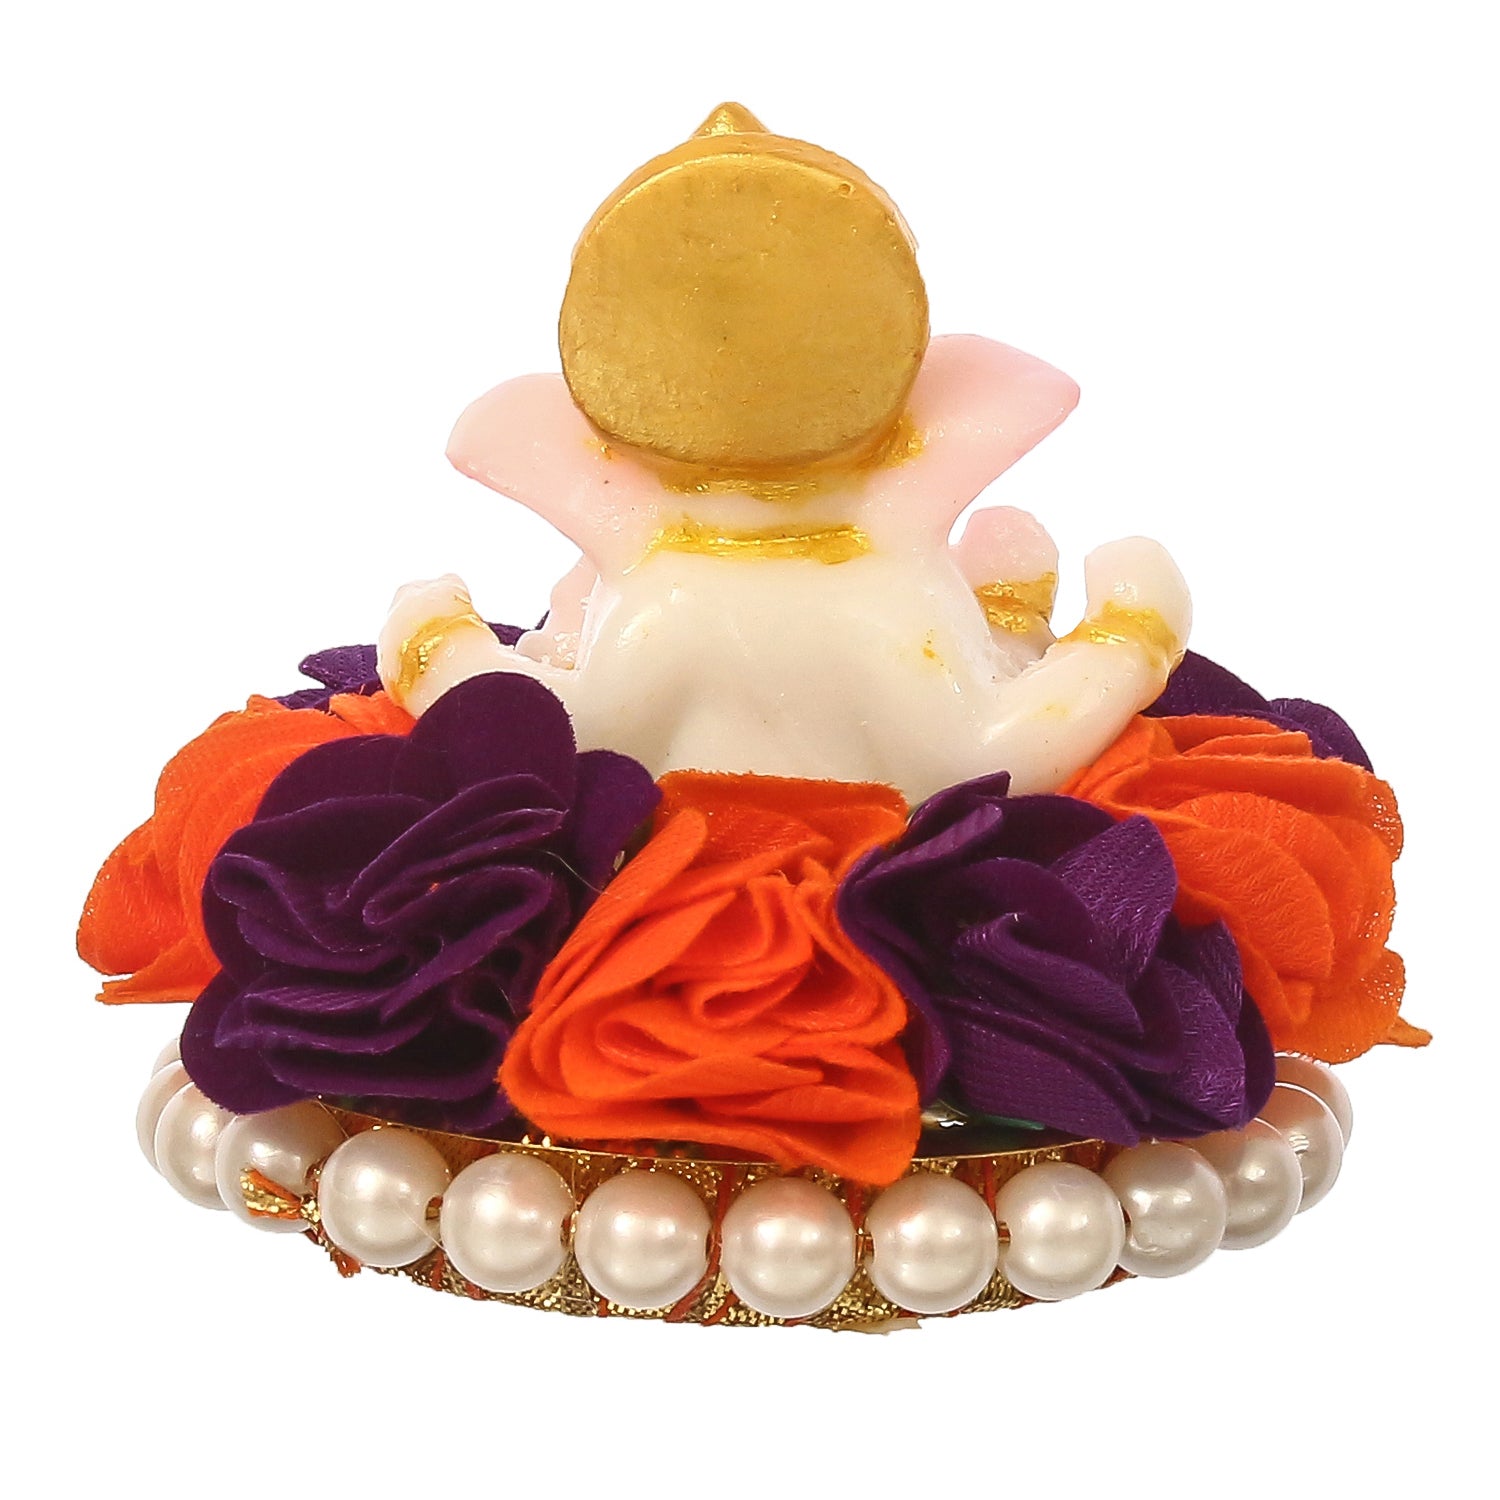 Lord Ganesha Idol On Decorative Handcrafted Orange And Purple Flowers Plate 6